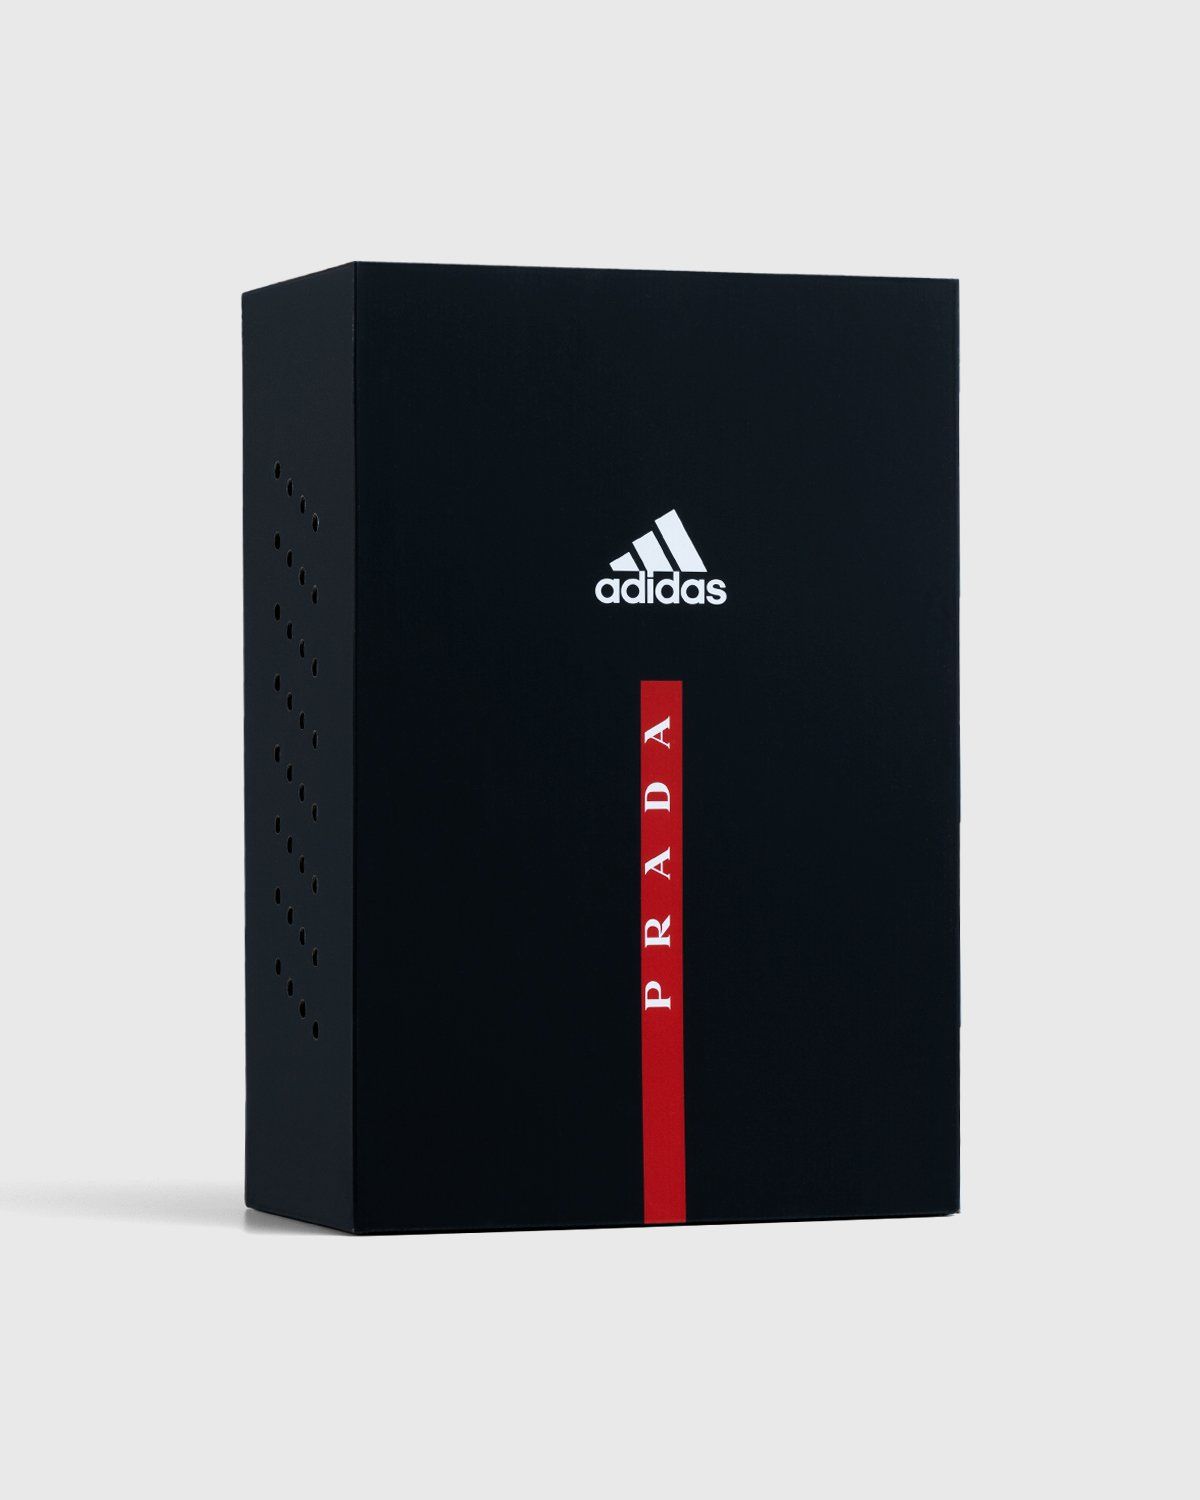 Adidas x Prada – A+P Luna Rossa 21 Performance - Low Top Sneakers - Grey - Image 12